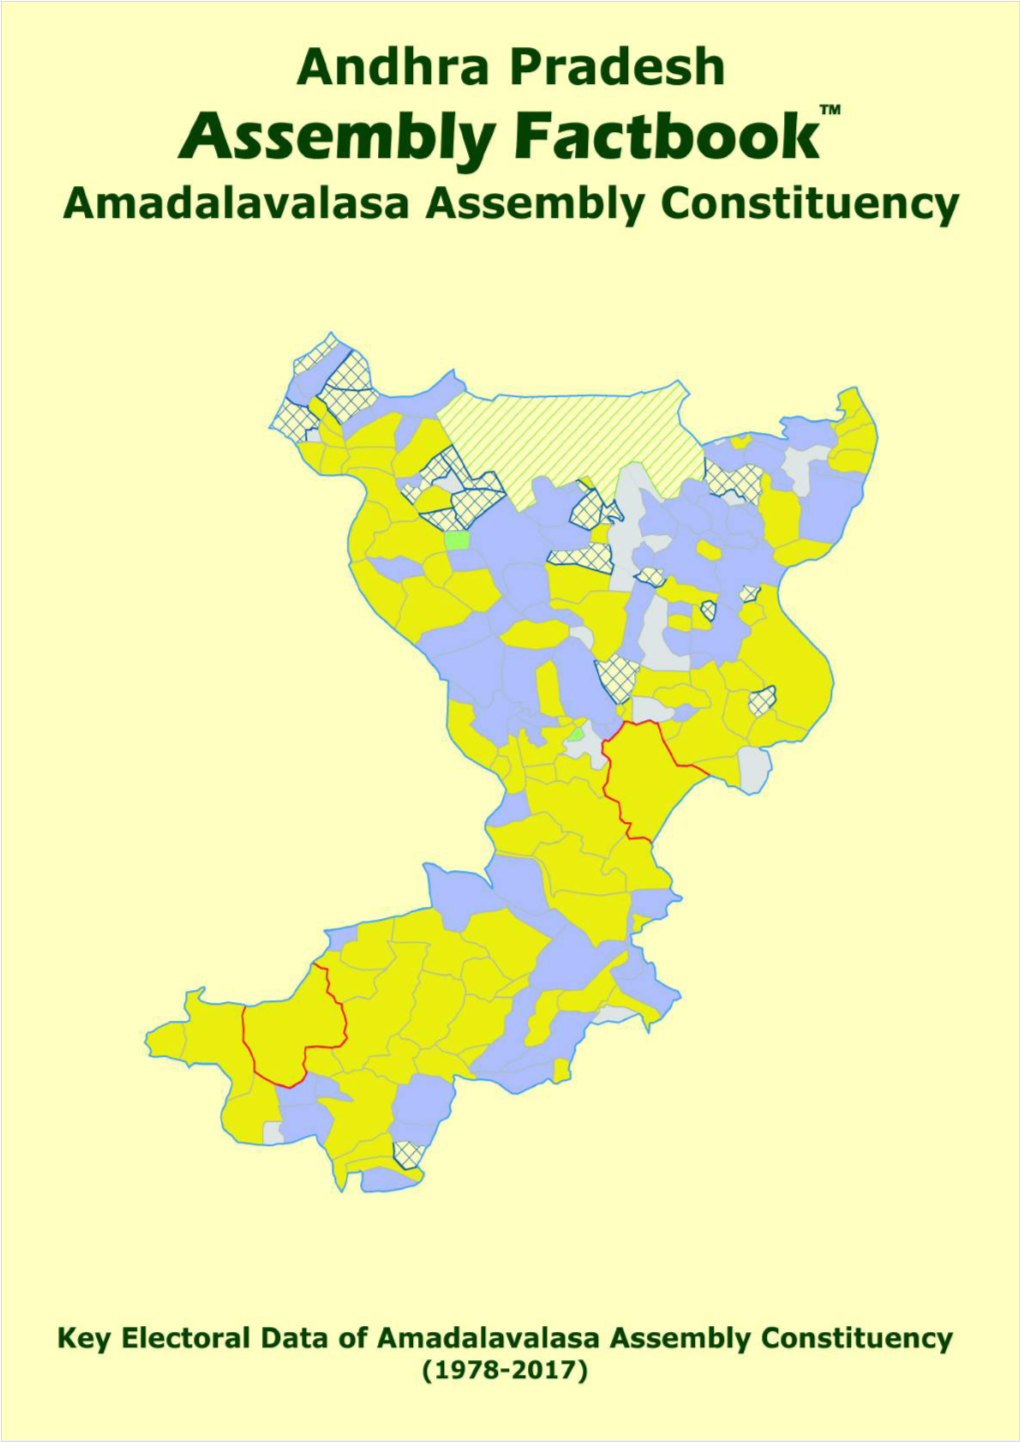 Amadalavalasa Assembly Andhra Pradesh Factbook